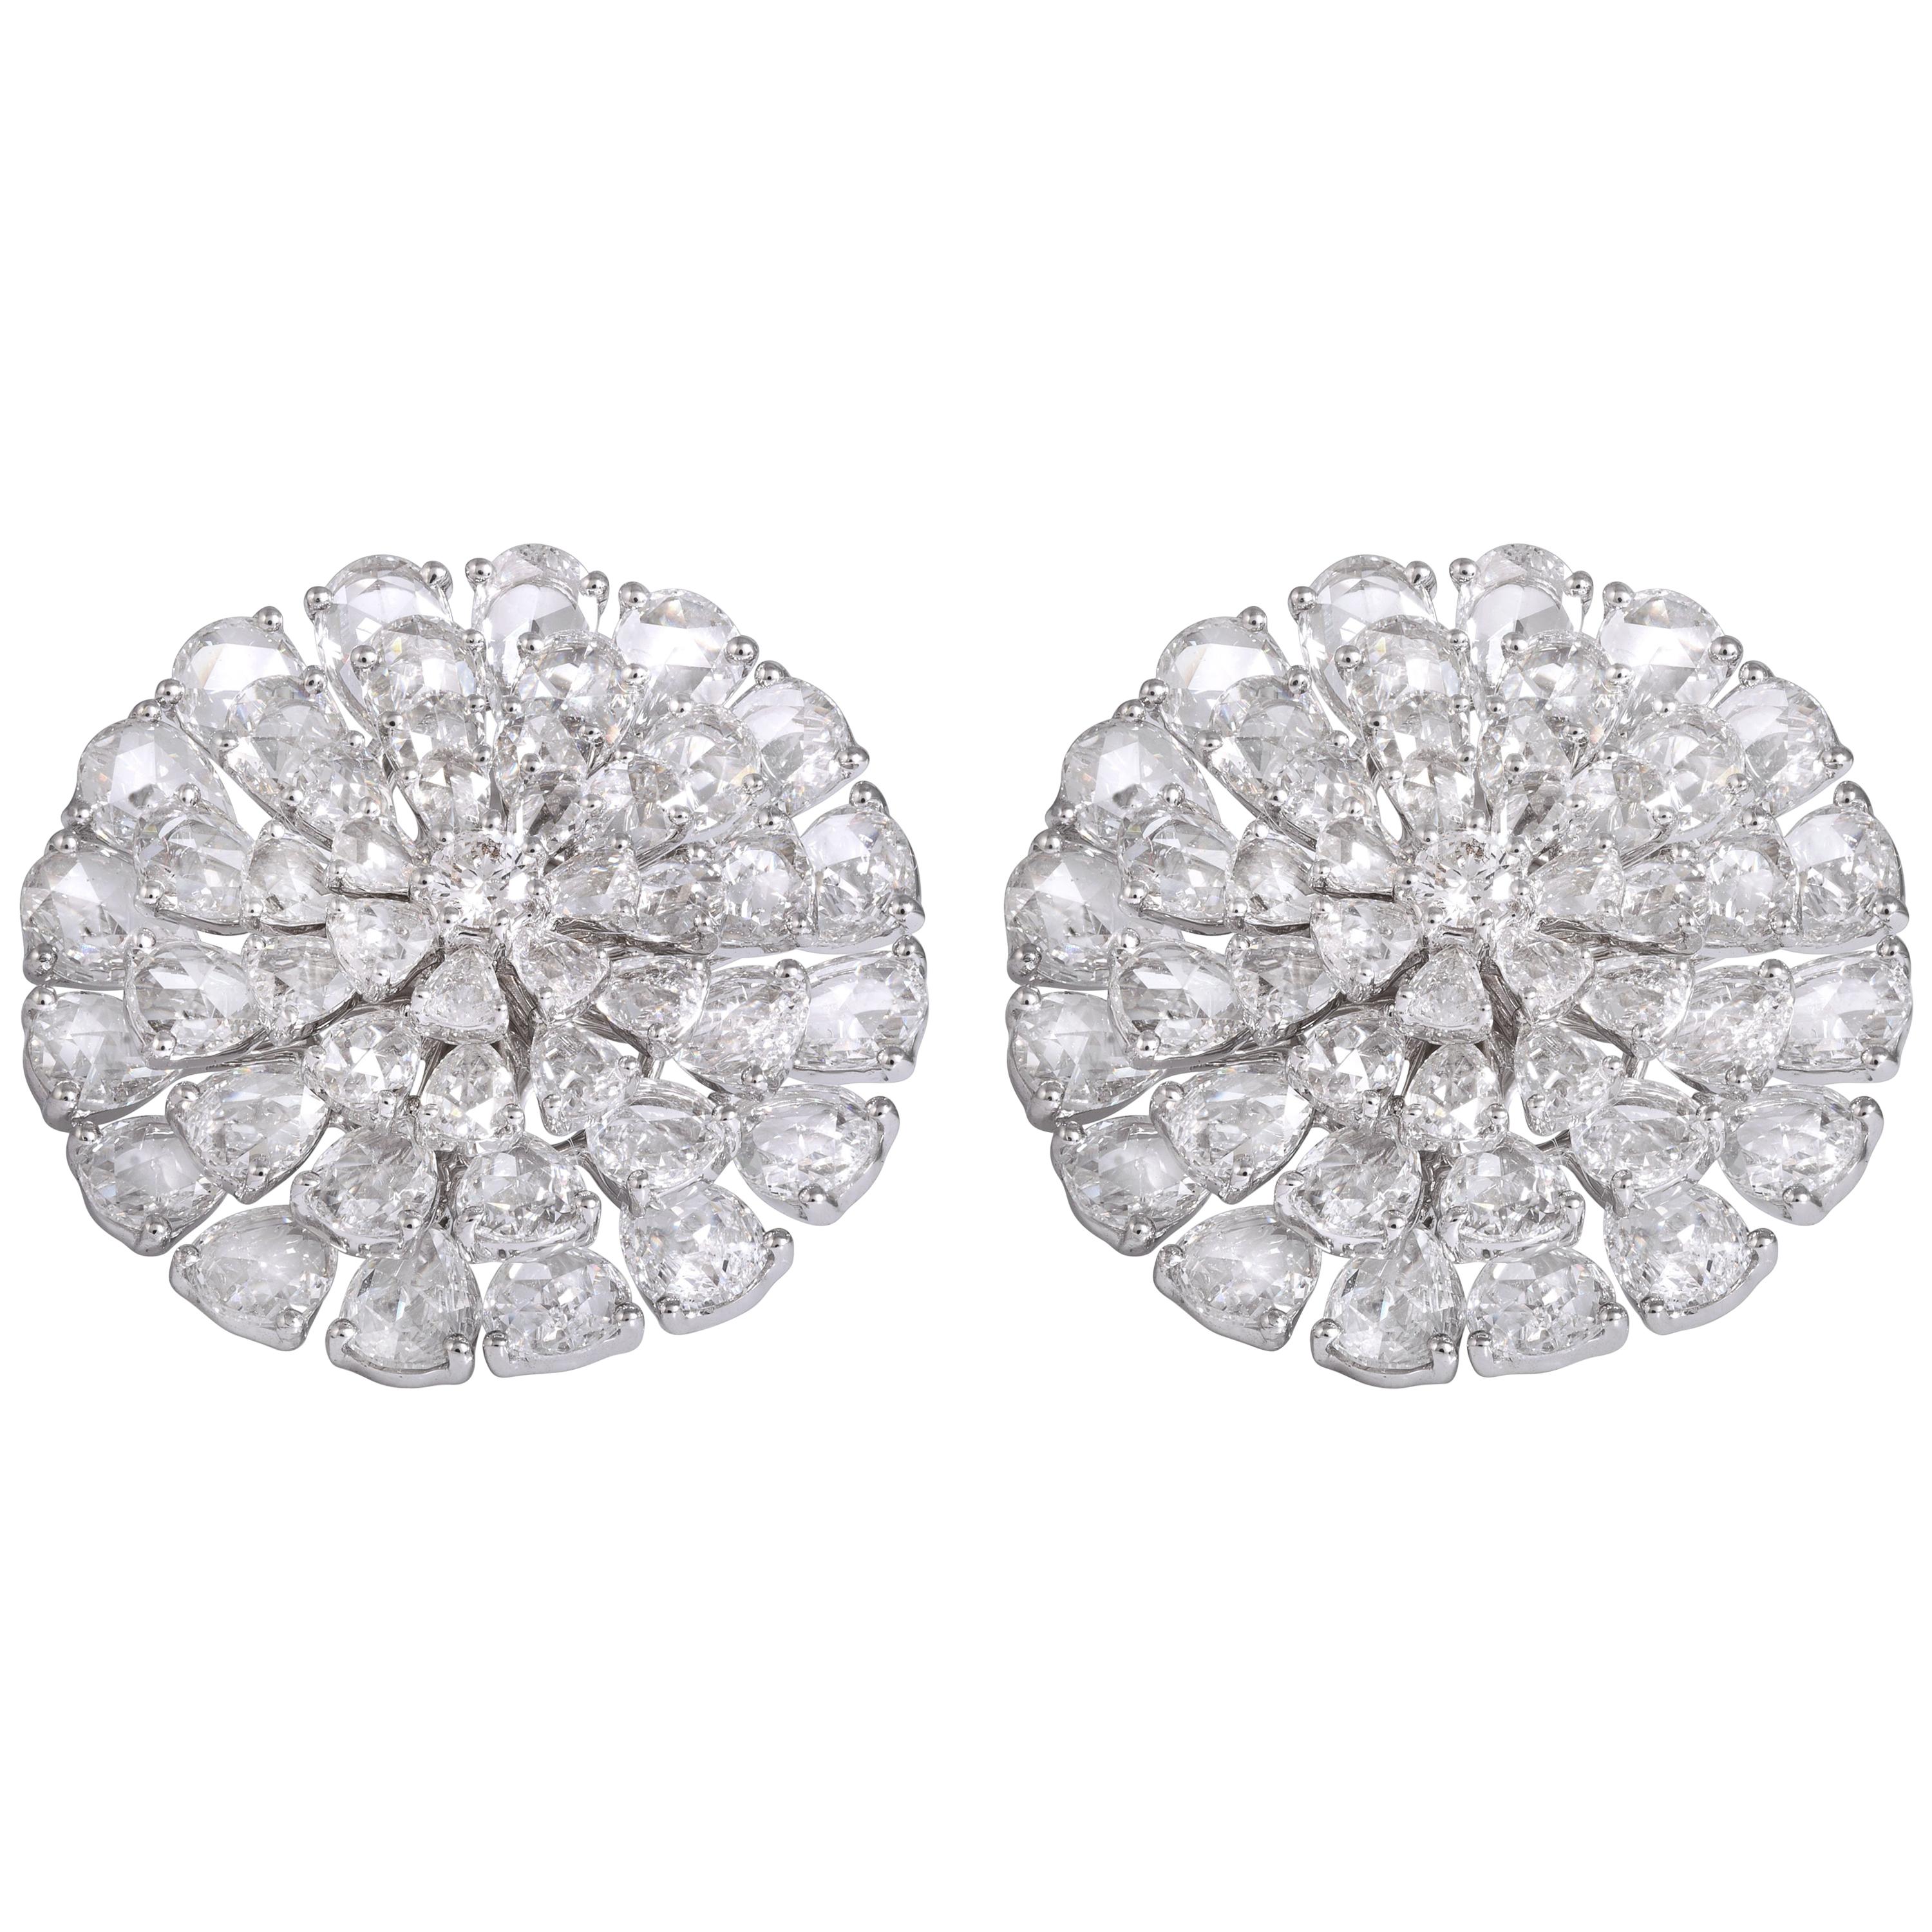 Floral inspired 11.22 carats Fancy shape Rose Cut White Diamond Earrings Studs 